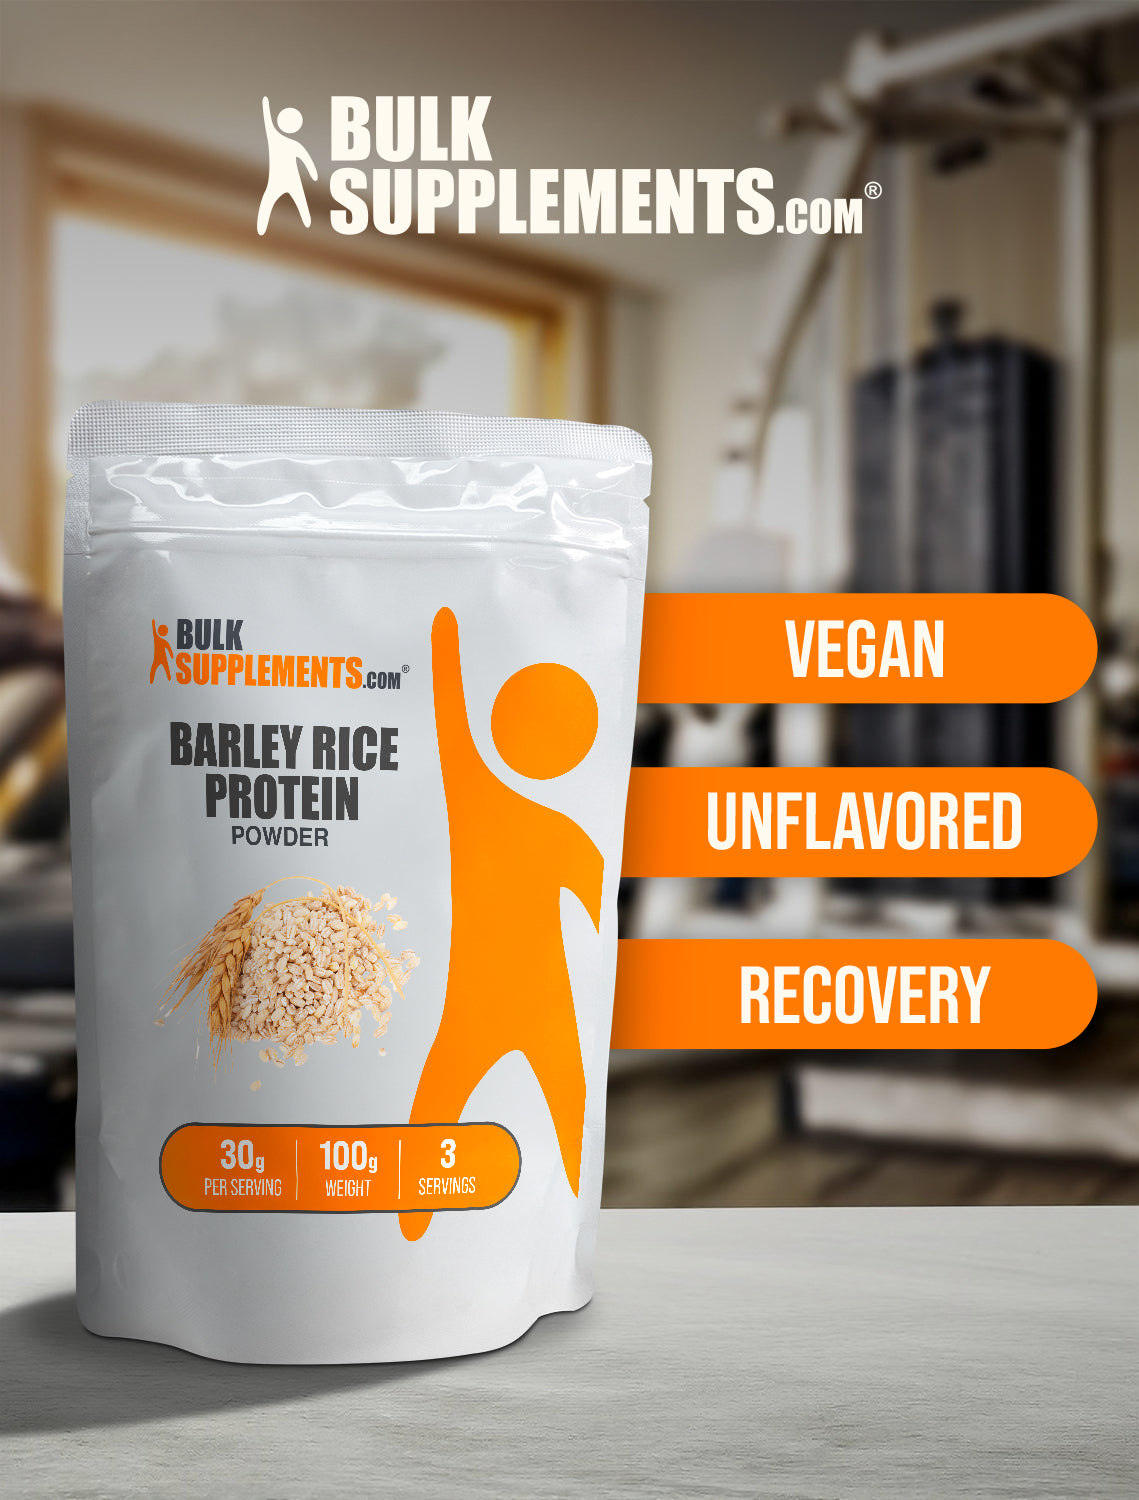 Barley rice protein powder 100g keywords image